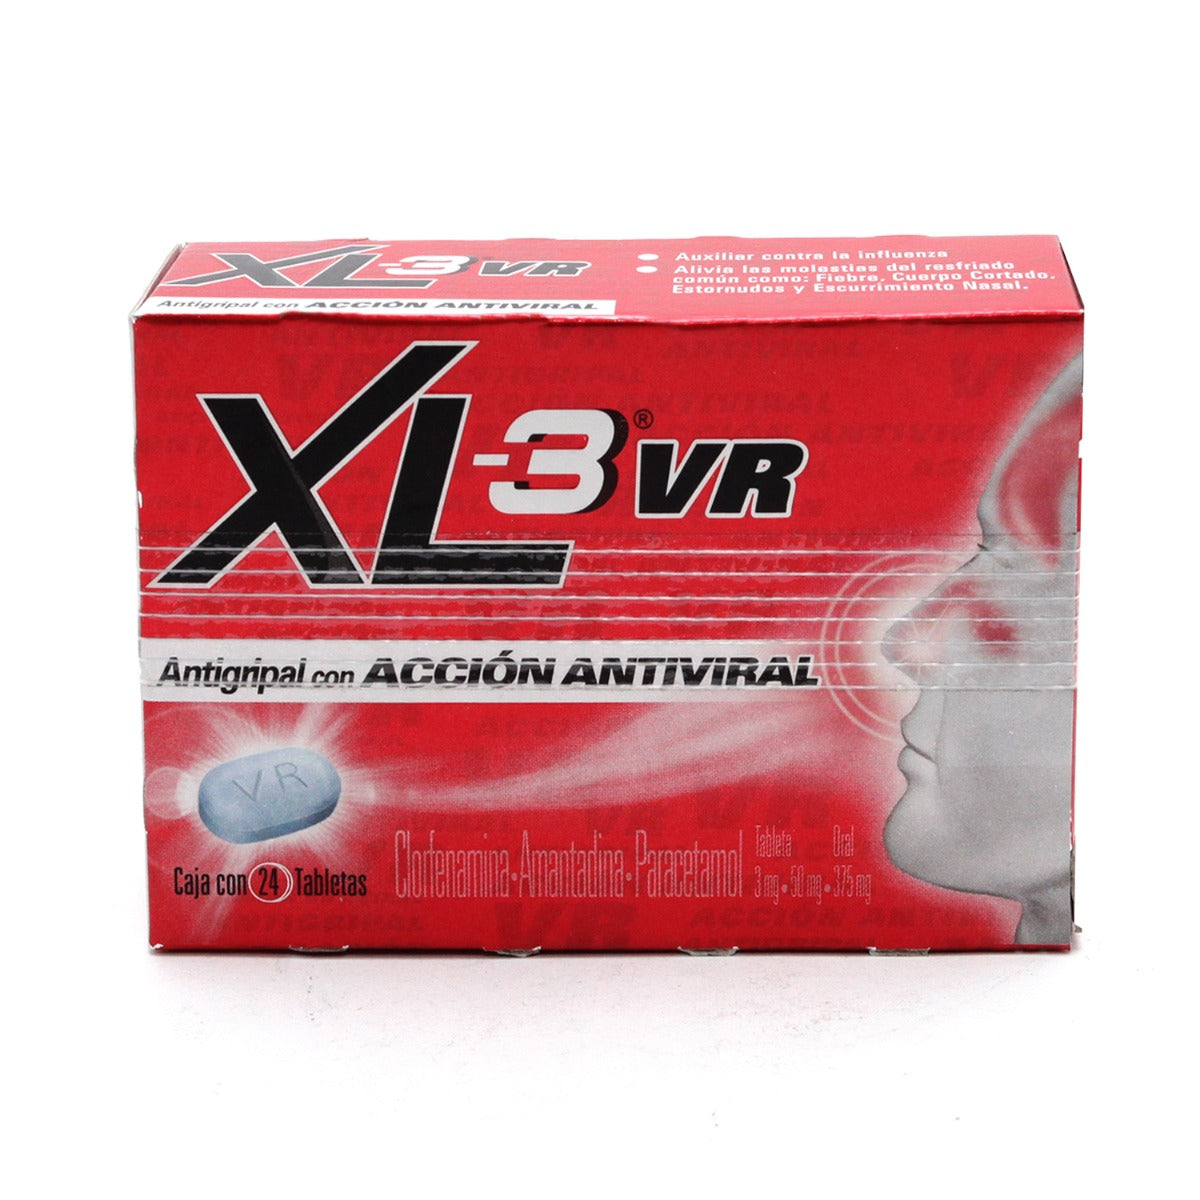 Antigripal XL 3 Vr Caja con 24 Tabletas